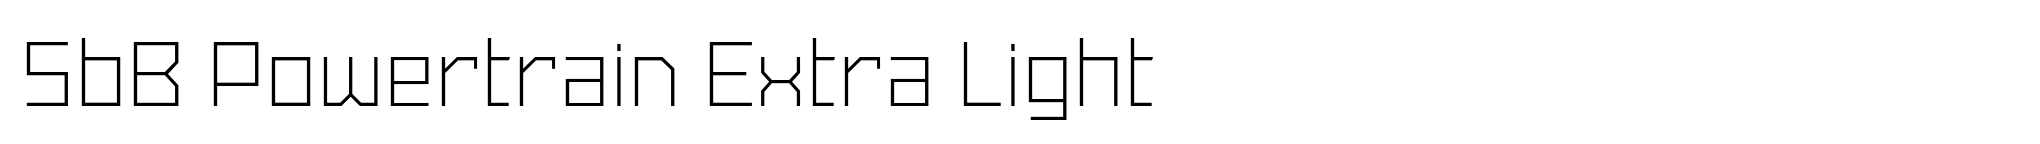 SbB Powertrain Extra Light image